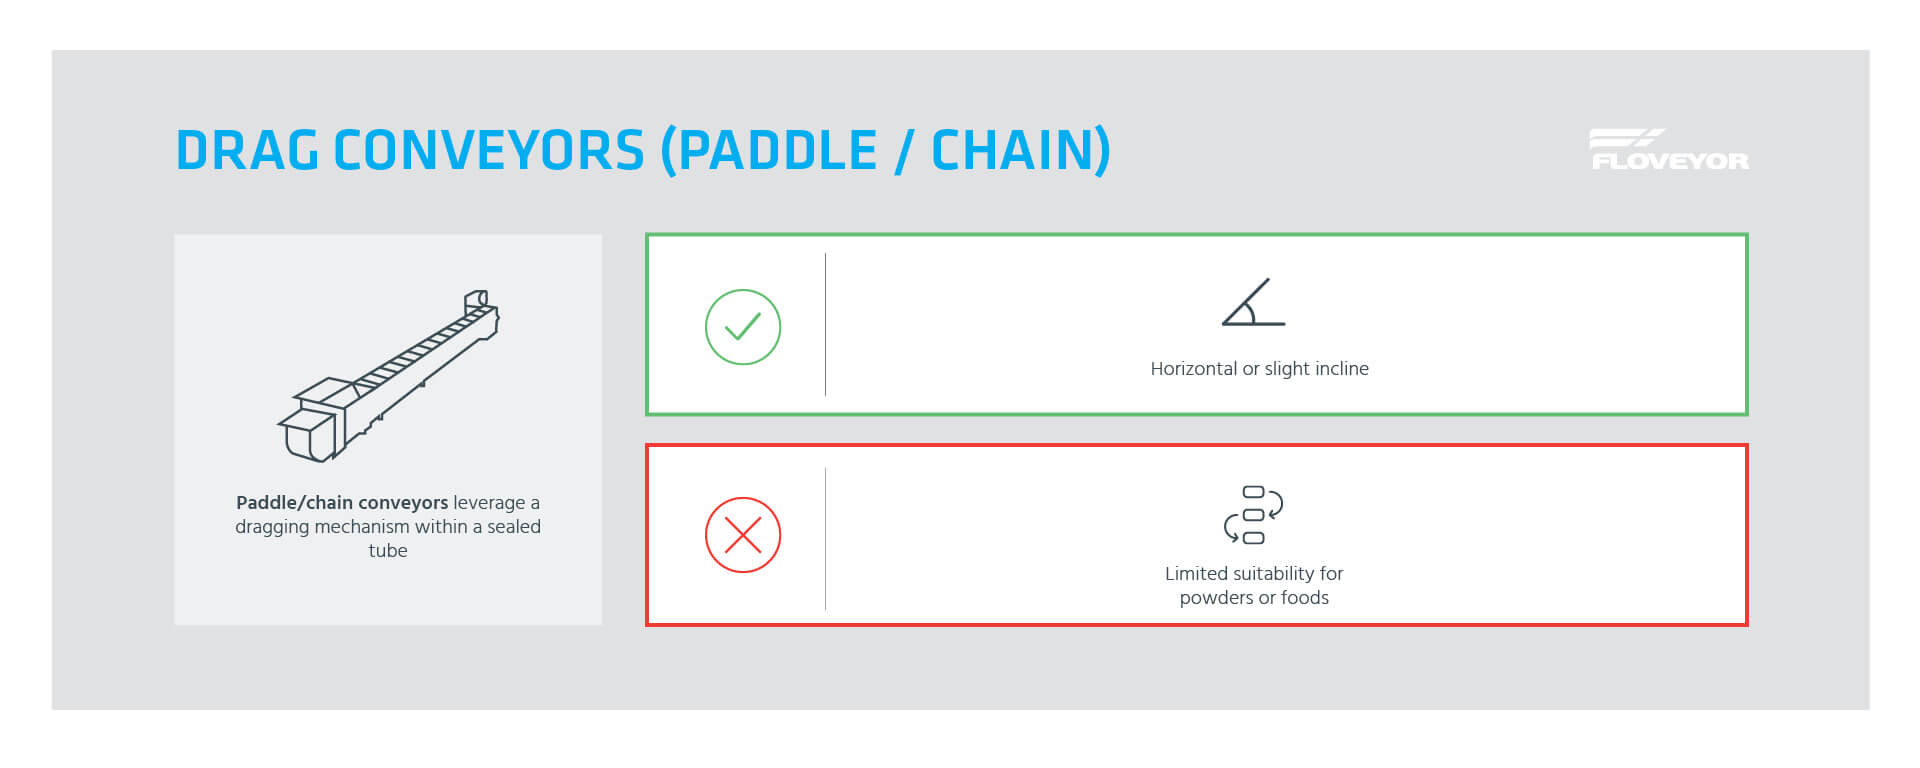 Drag conveyors (paddle / chain) - Floveyor comparison graphic